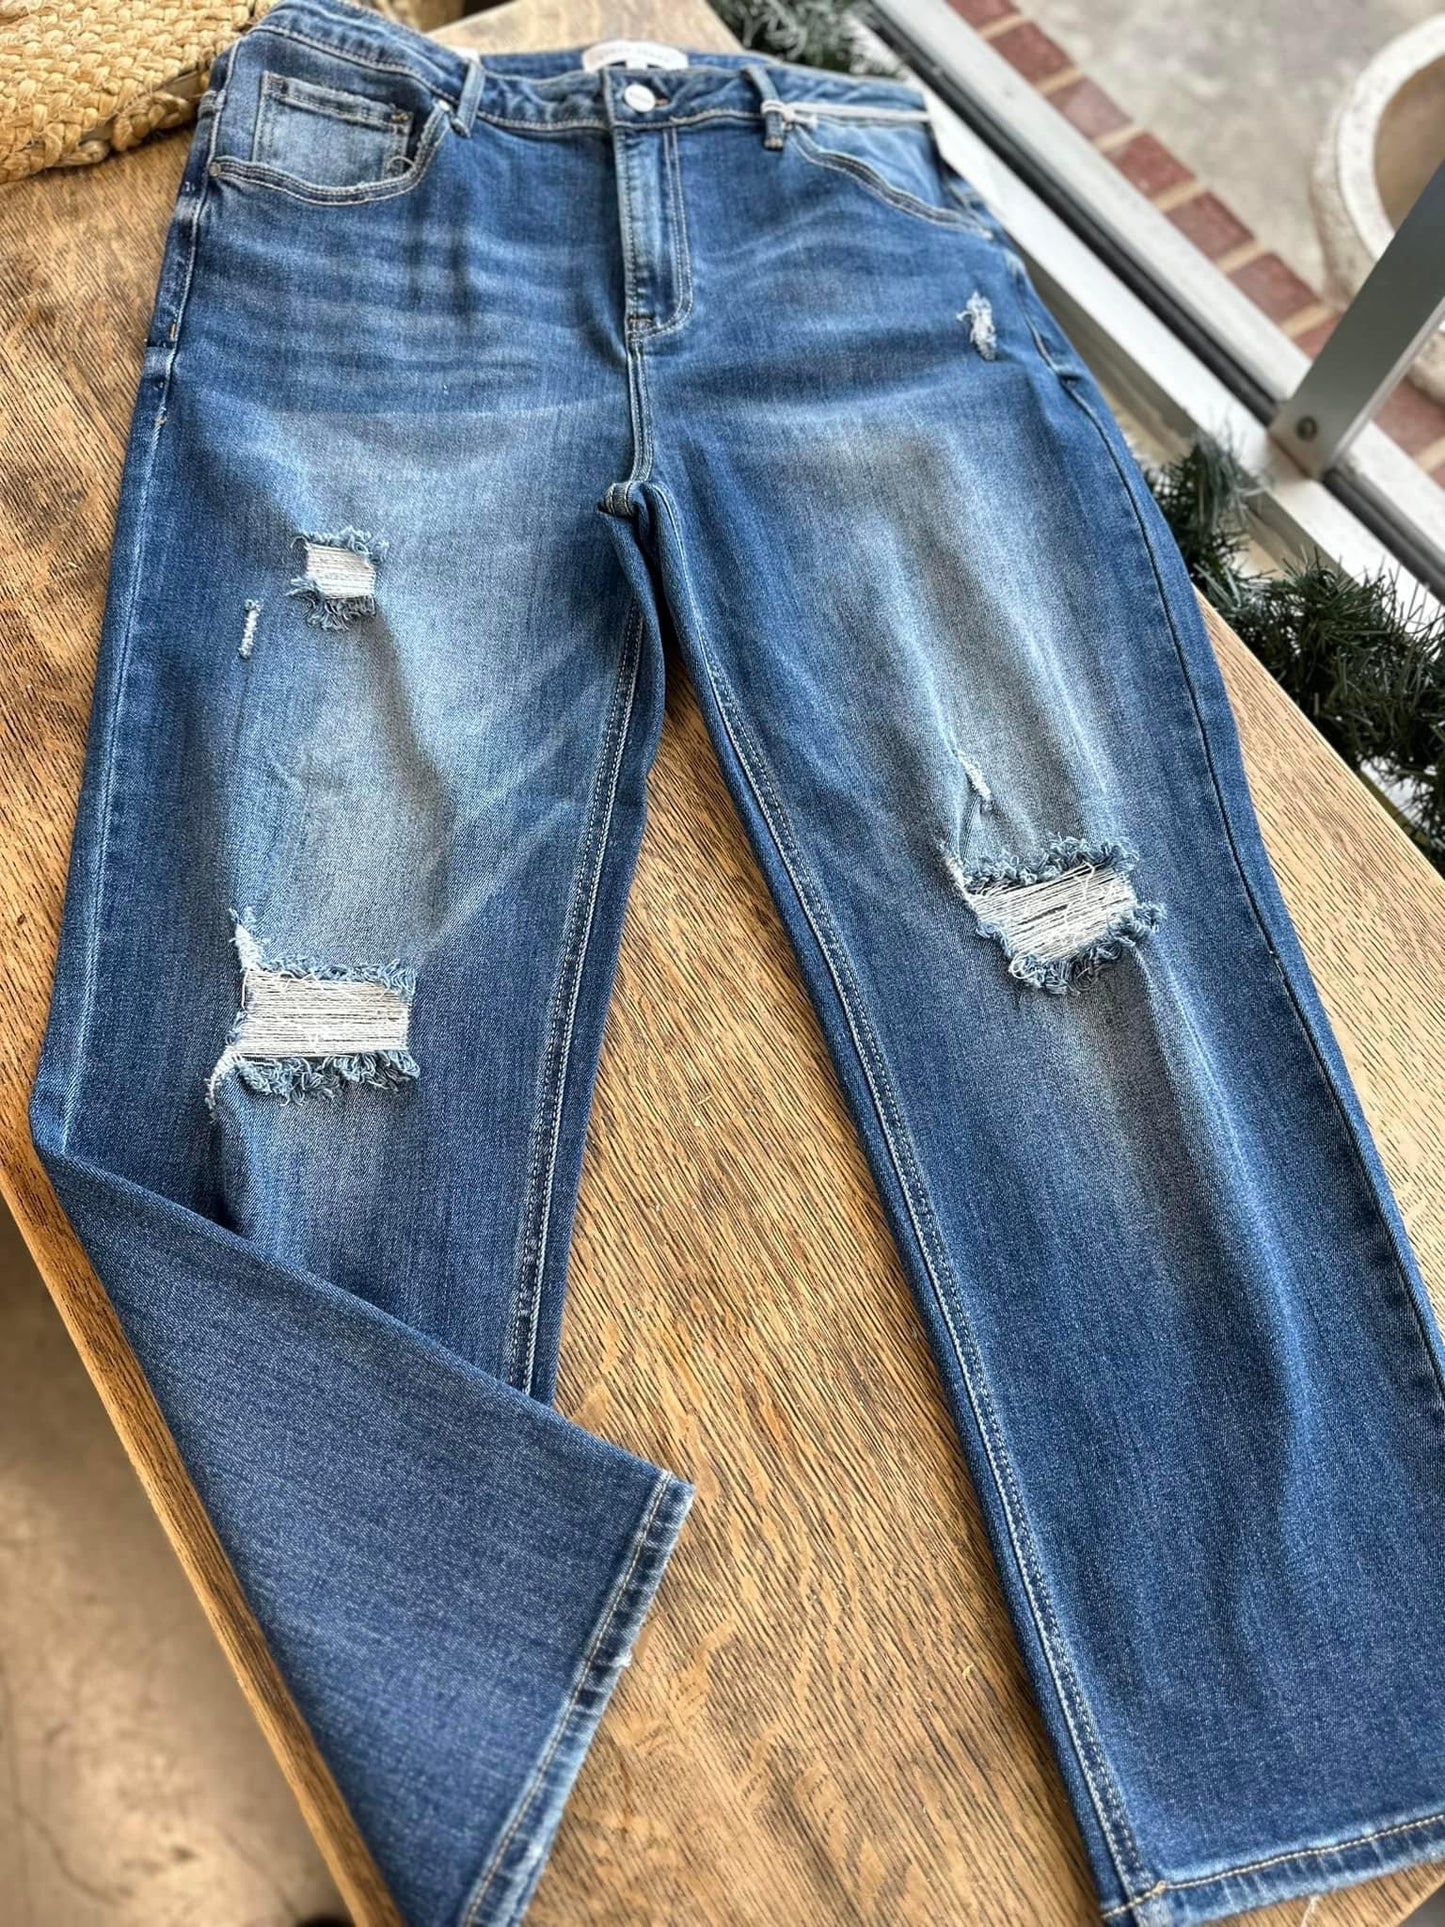 Risen plus dark wash ripped jeans